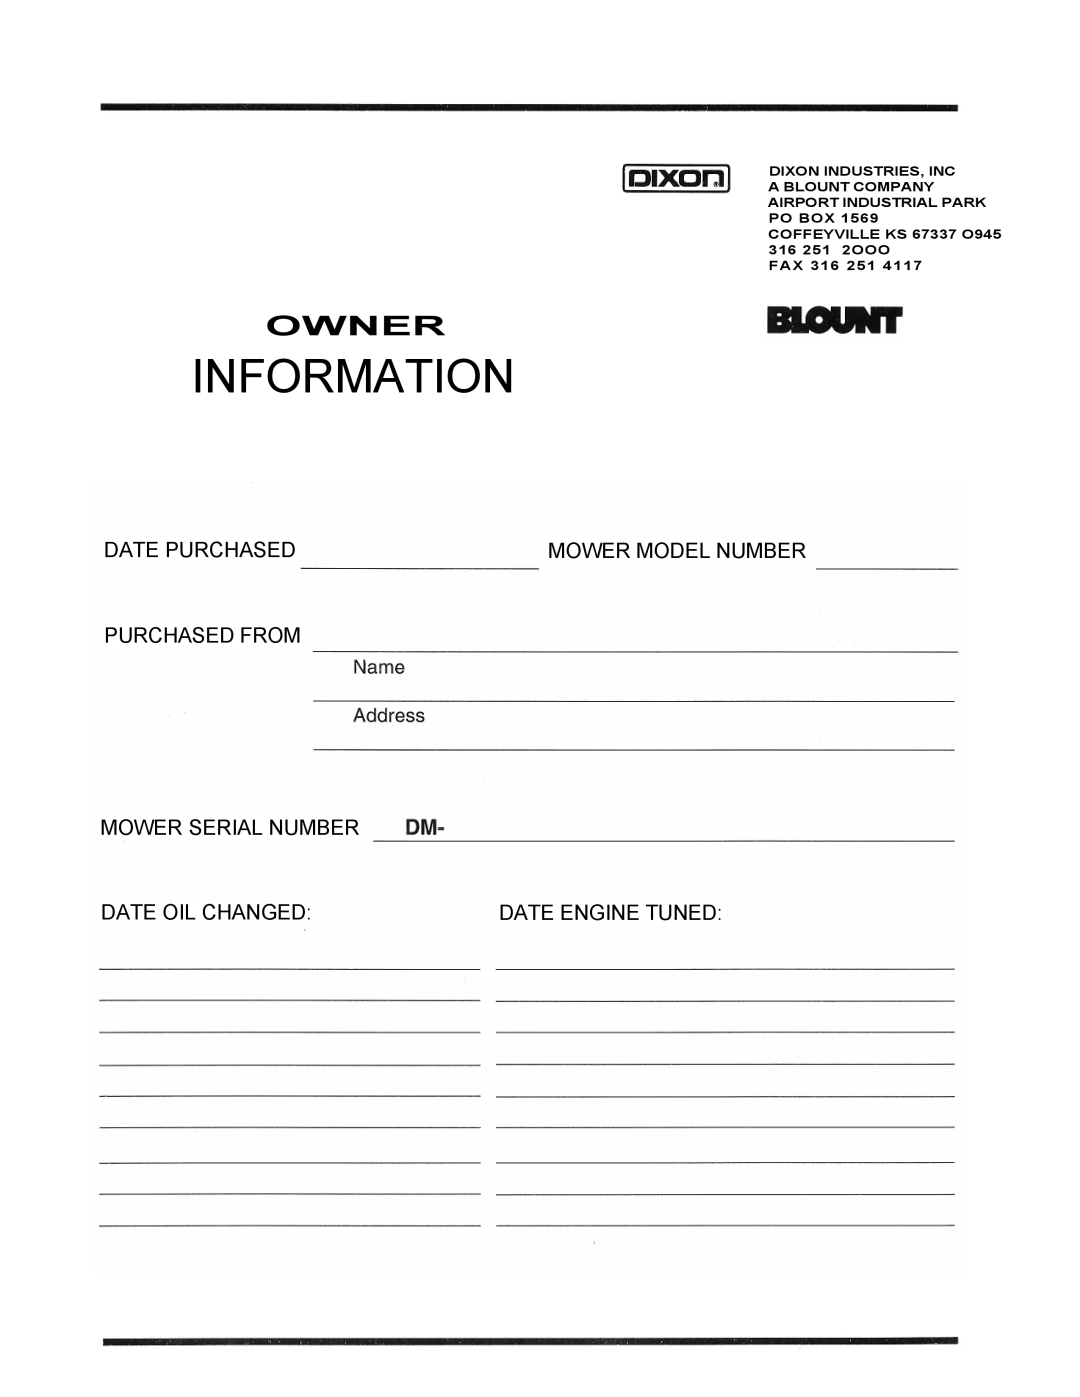 Dixon 6601 Series manual Information, Owner, Fax 